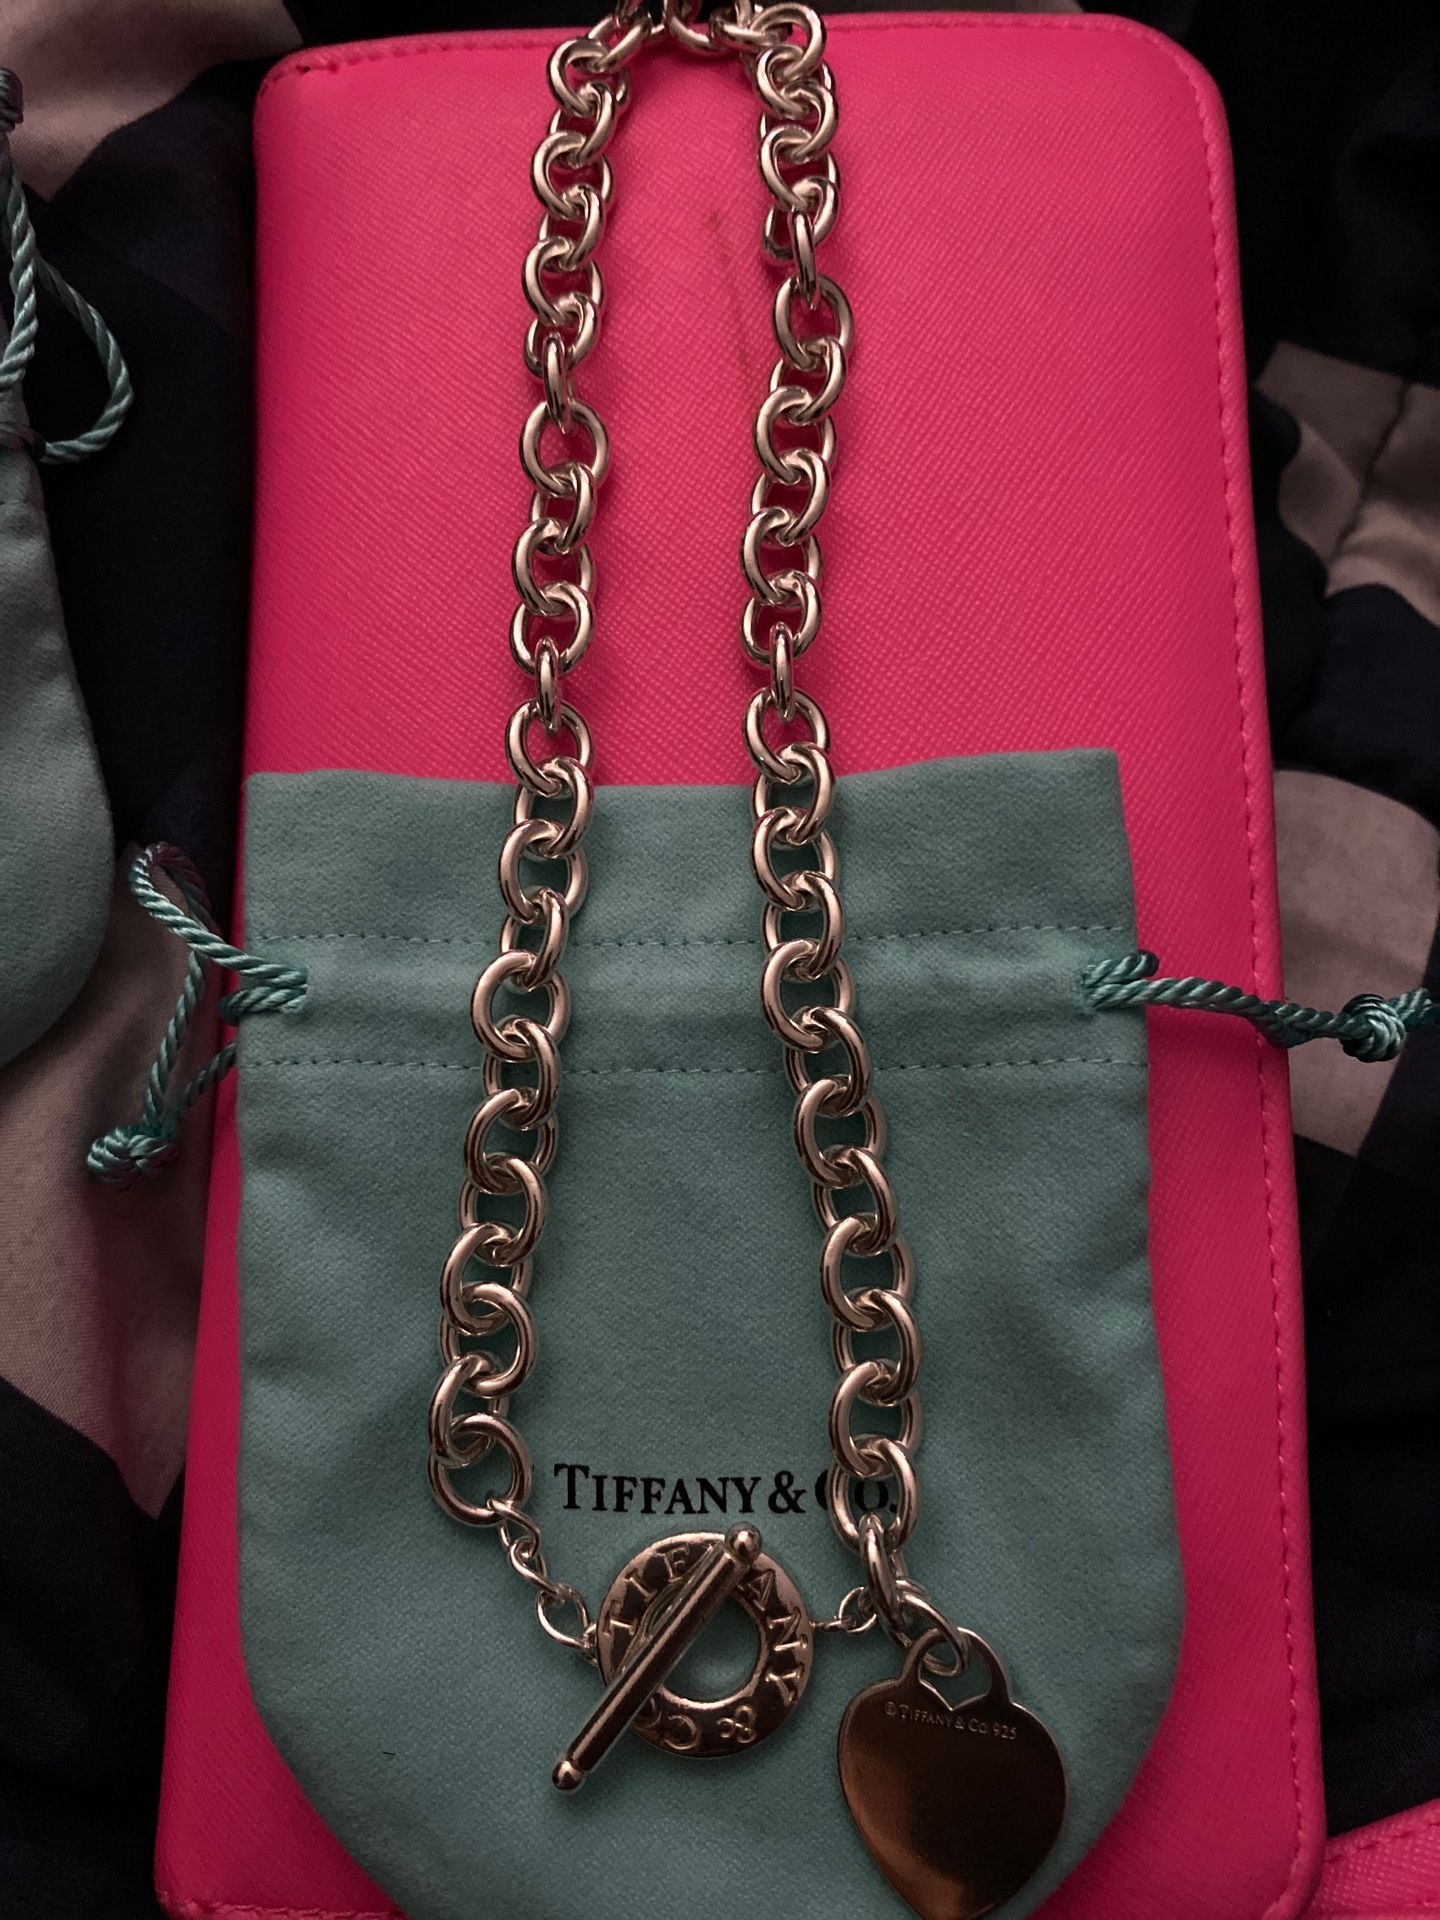 Authentic Tiffany chain